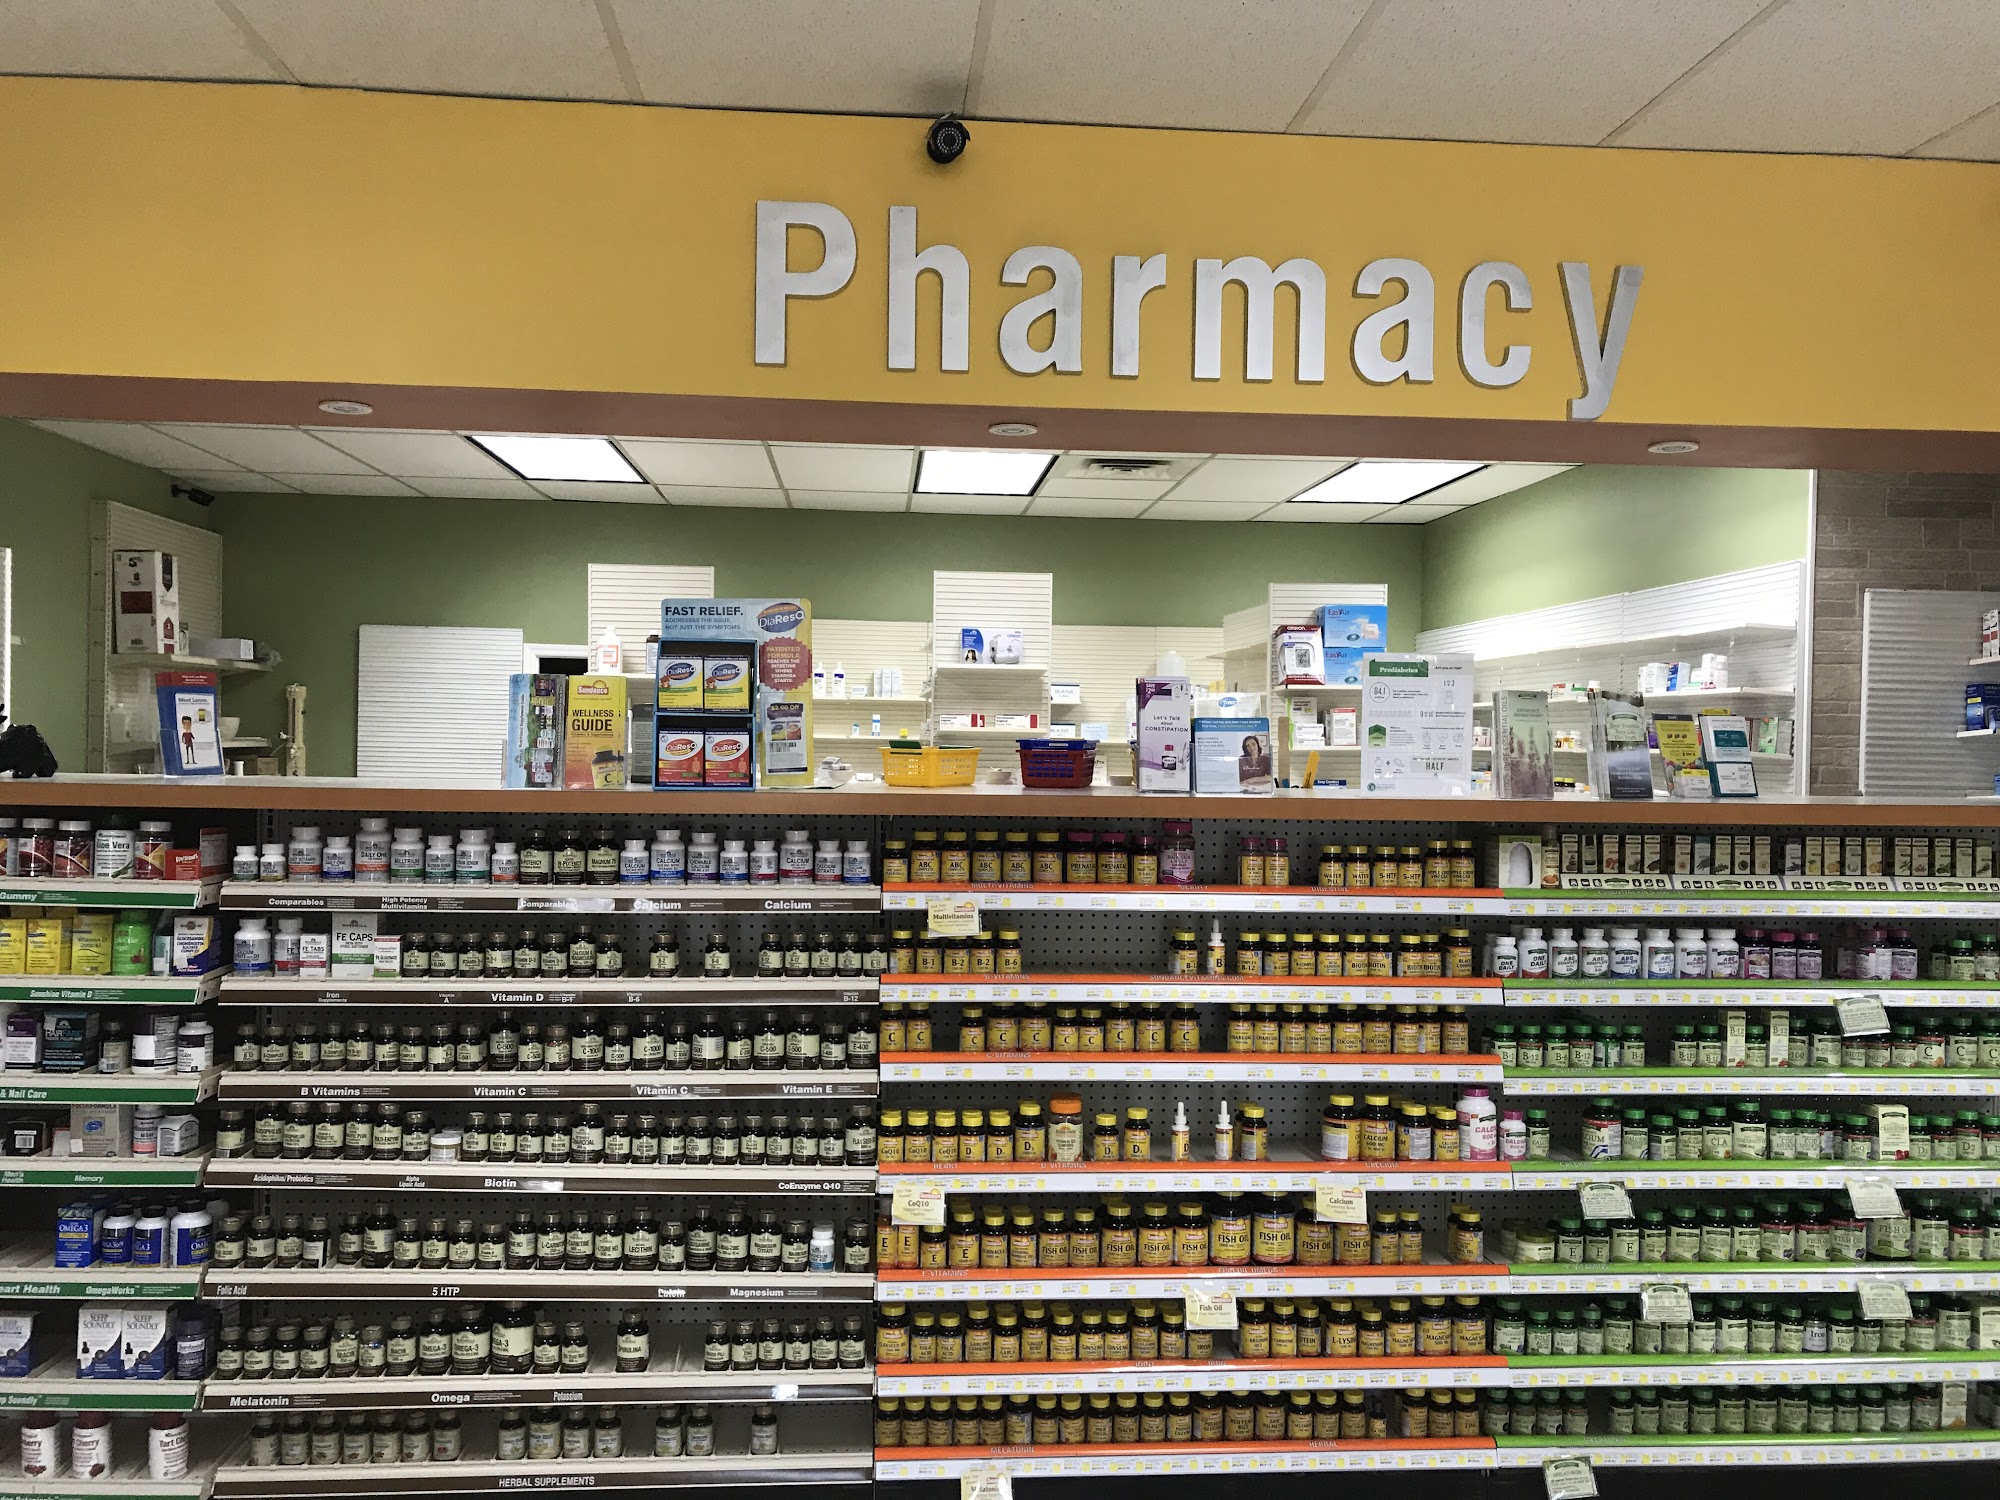 Wellcare Pharmacy